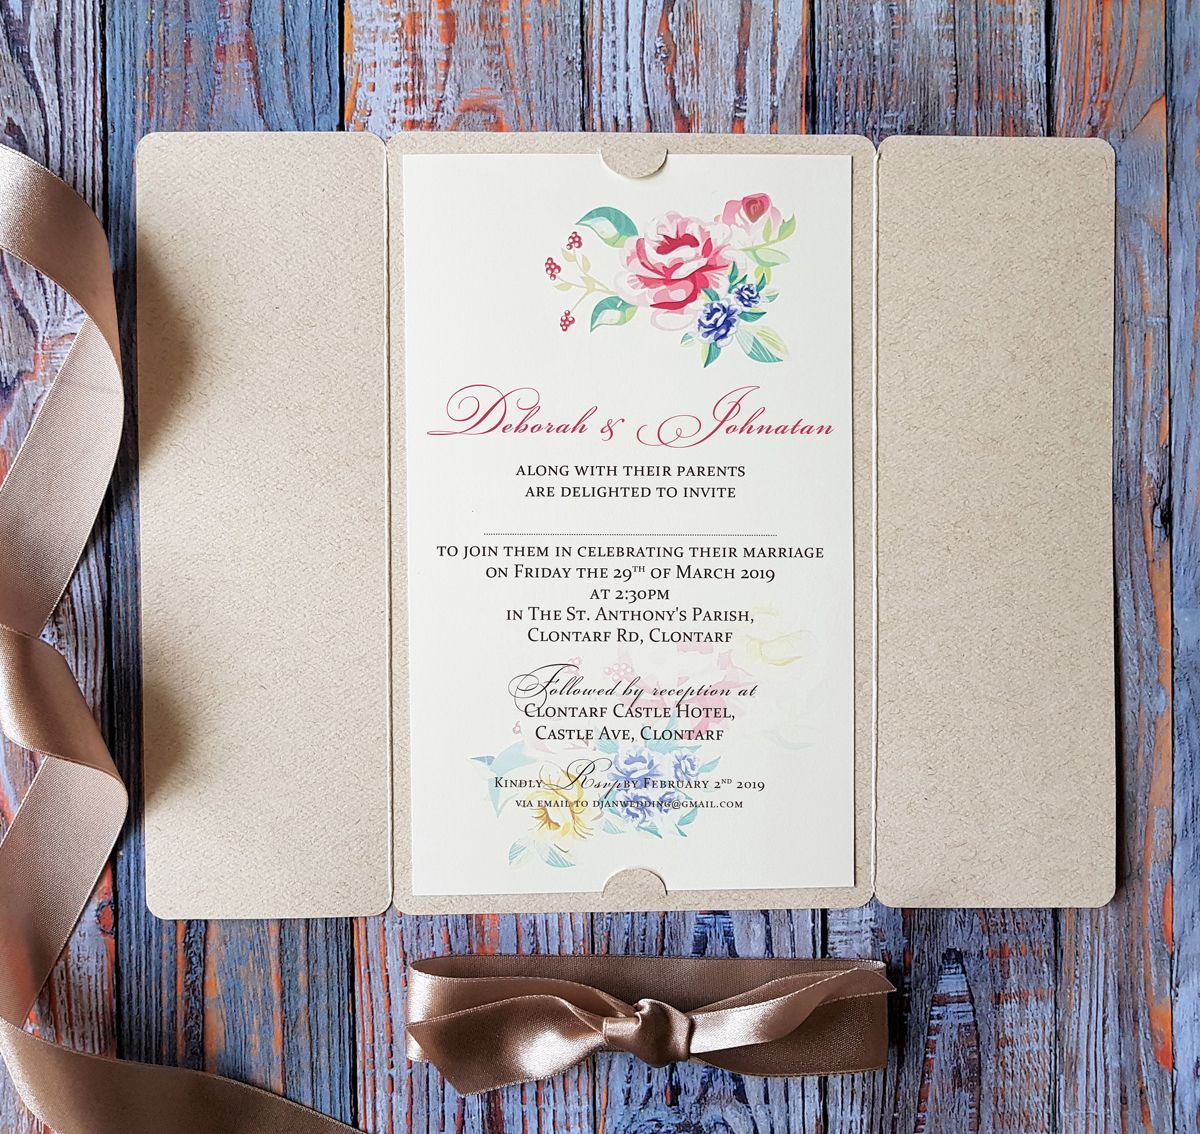 wedding invitation with romantic roses